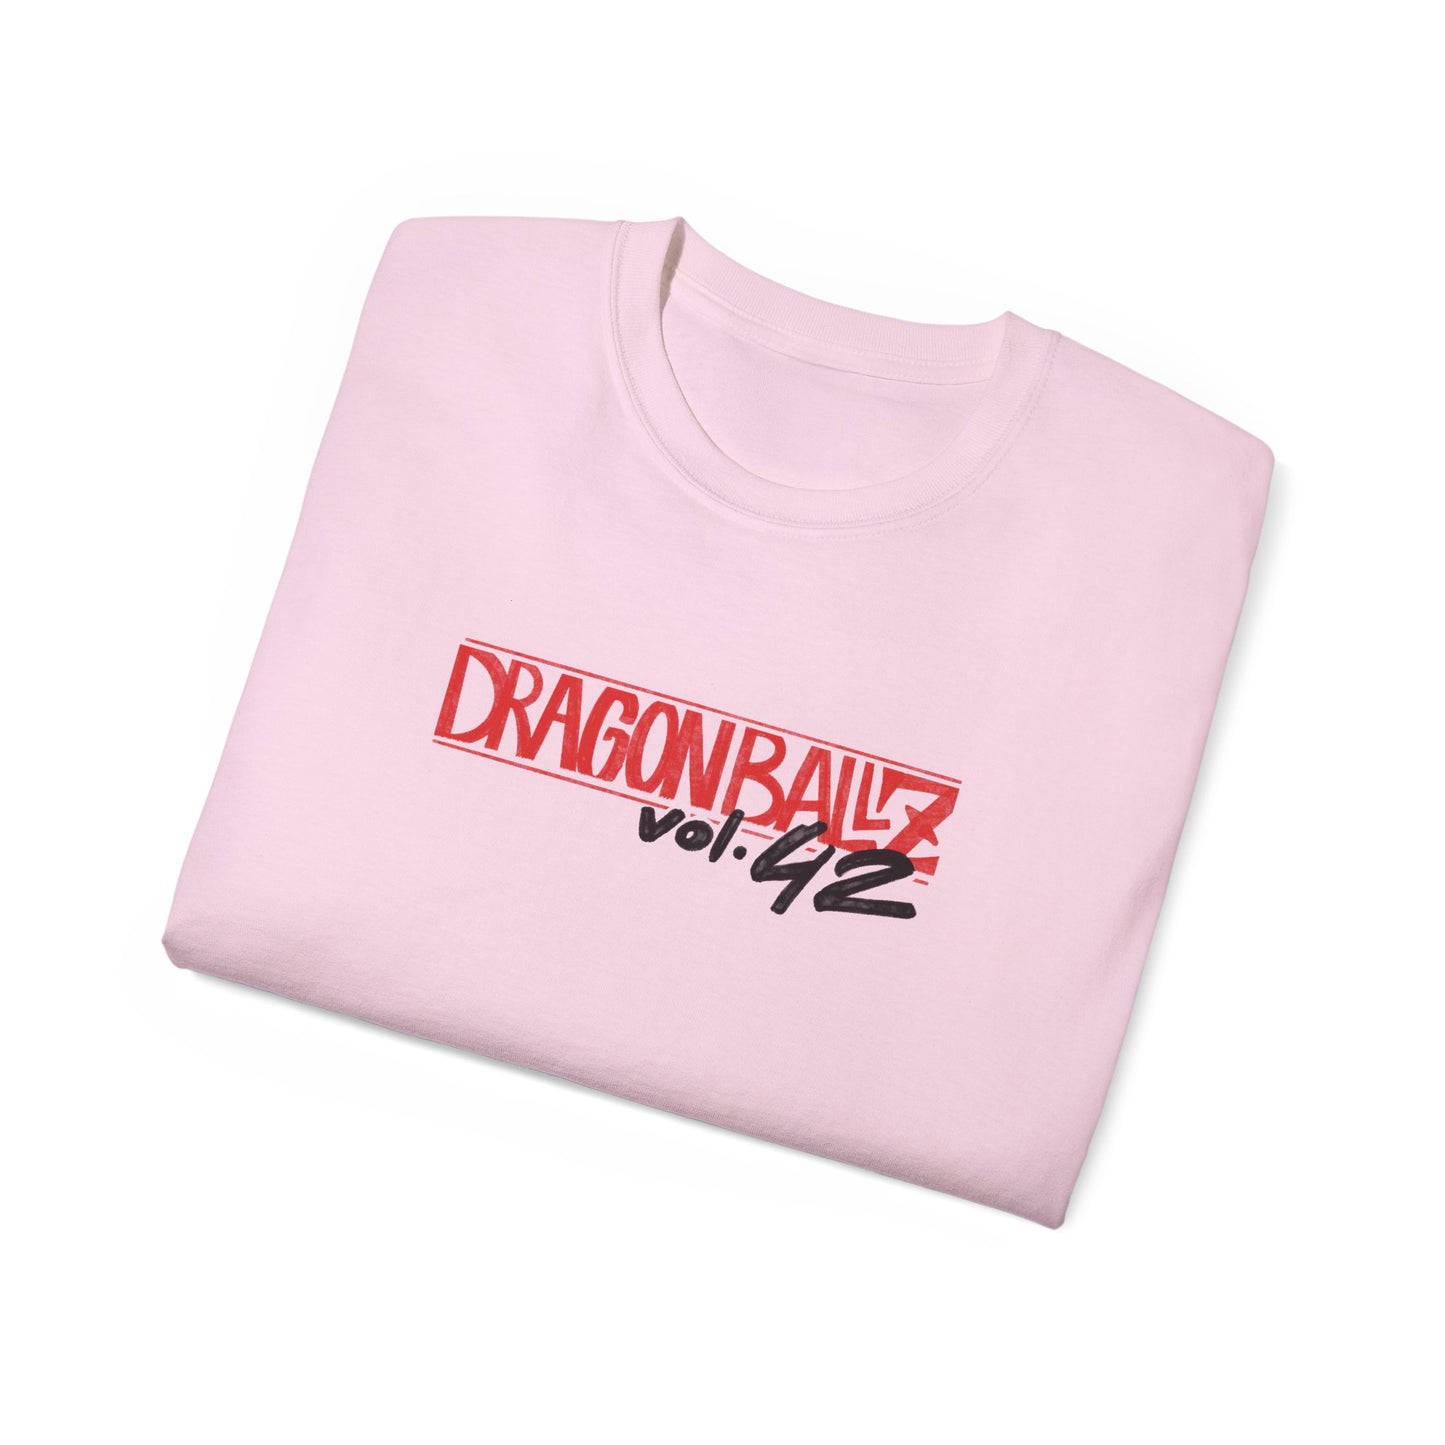 T-Shirt DBZ vol.42 - Alternative cover - Unisex Ultra Cotton Tee